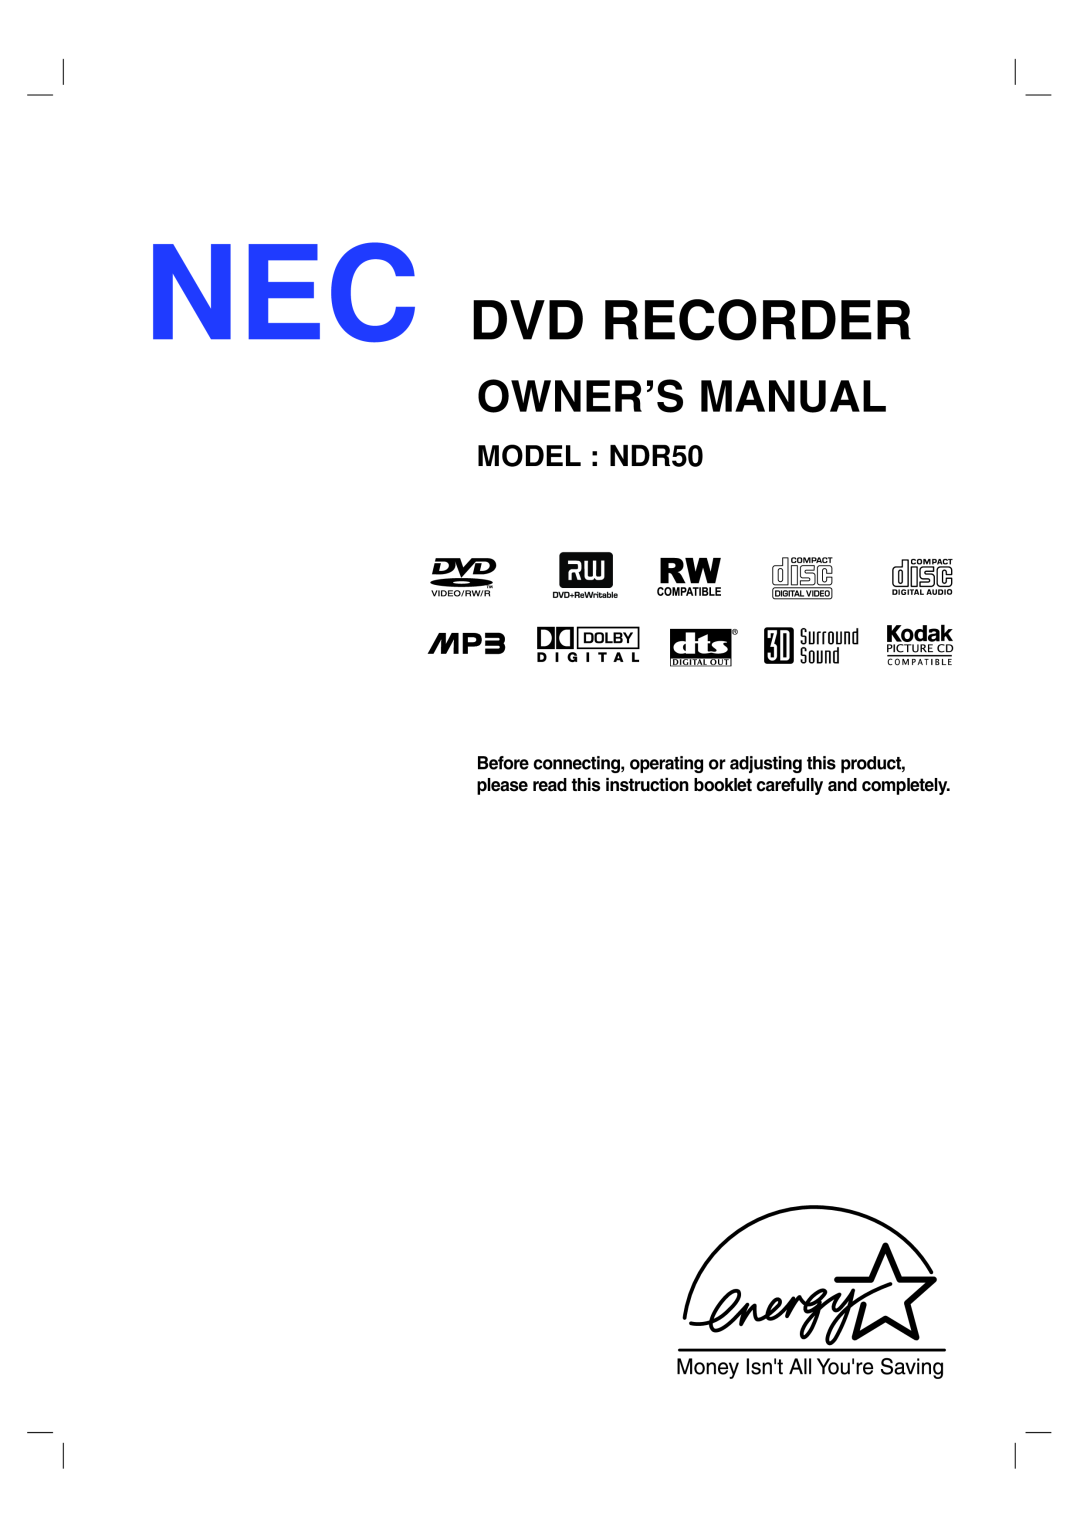 NEC owner manual Owner’S Manual, MODEL NDR50, Nec Dvd Recorder 